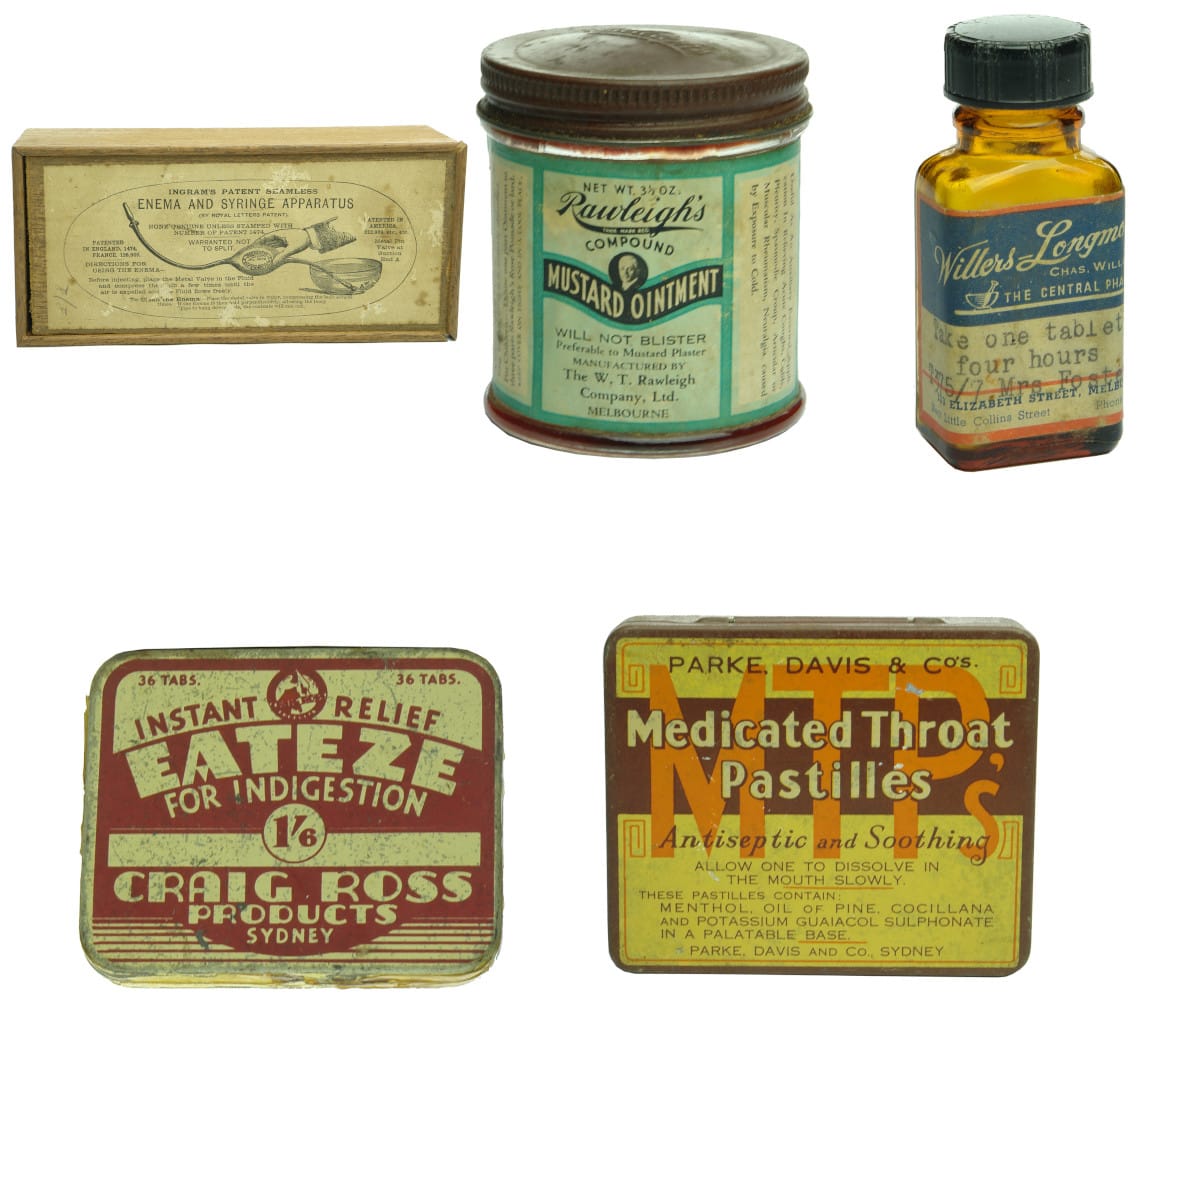 5 Medical type items: Ingram's Seamless Enema; Rawleigh's Mustard Ointment; Willers Longmore labelled bottle; Eateze, Craig Ross, Sydney; Parke Davis Medicated Throat Pastilles.